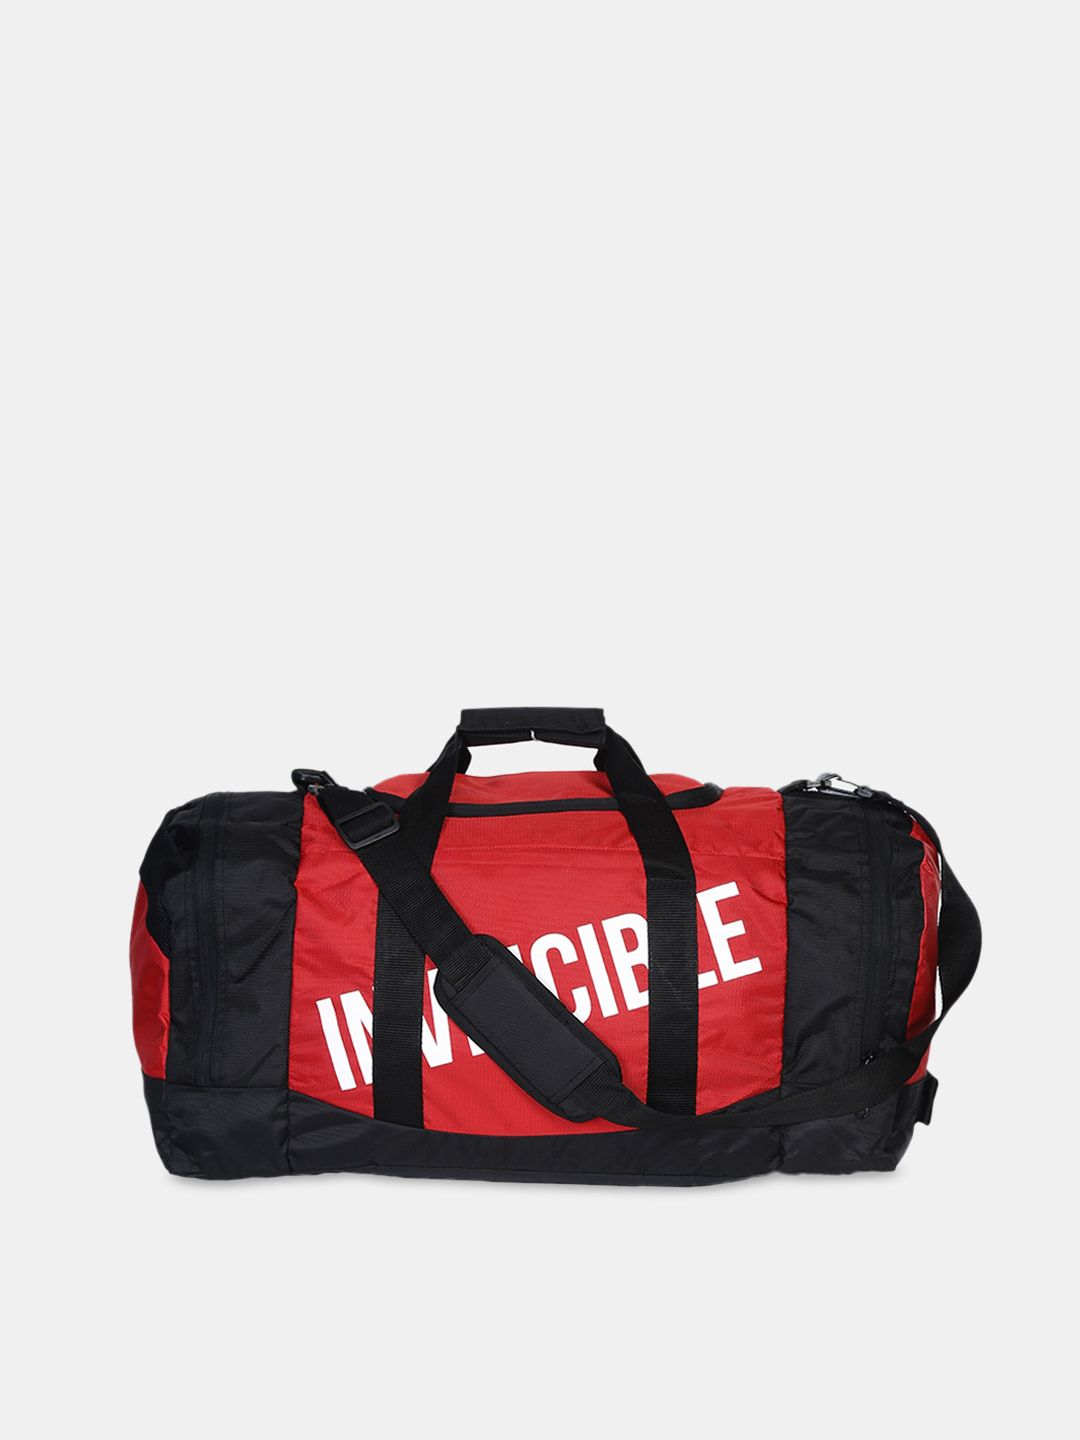 Invincible Red & Black Printed Large Duffle Bag 54 L Price in India